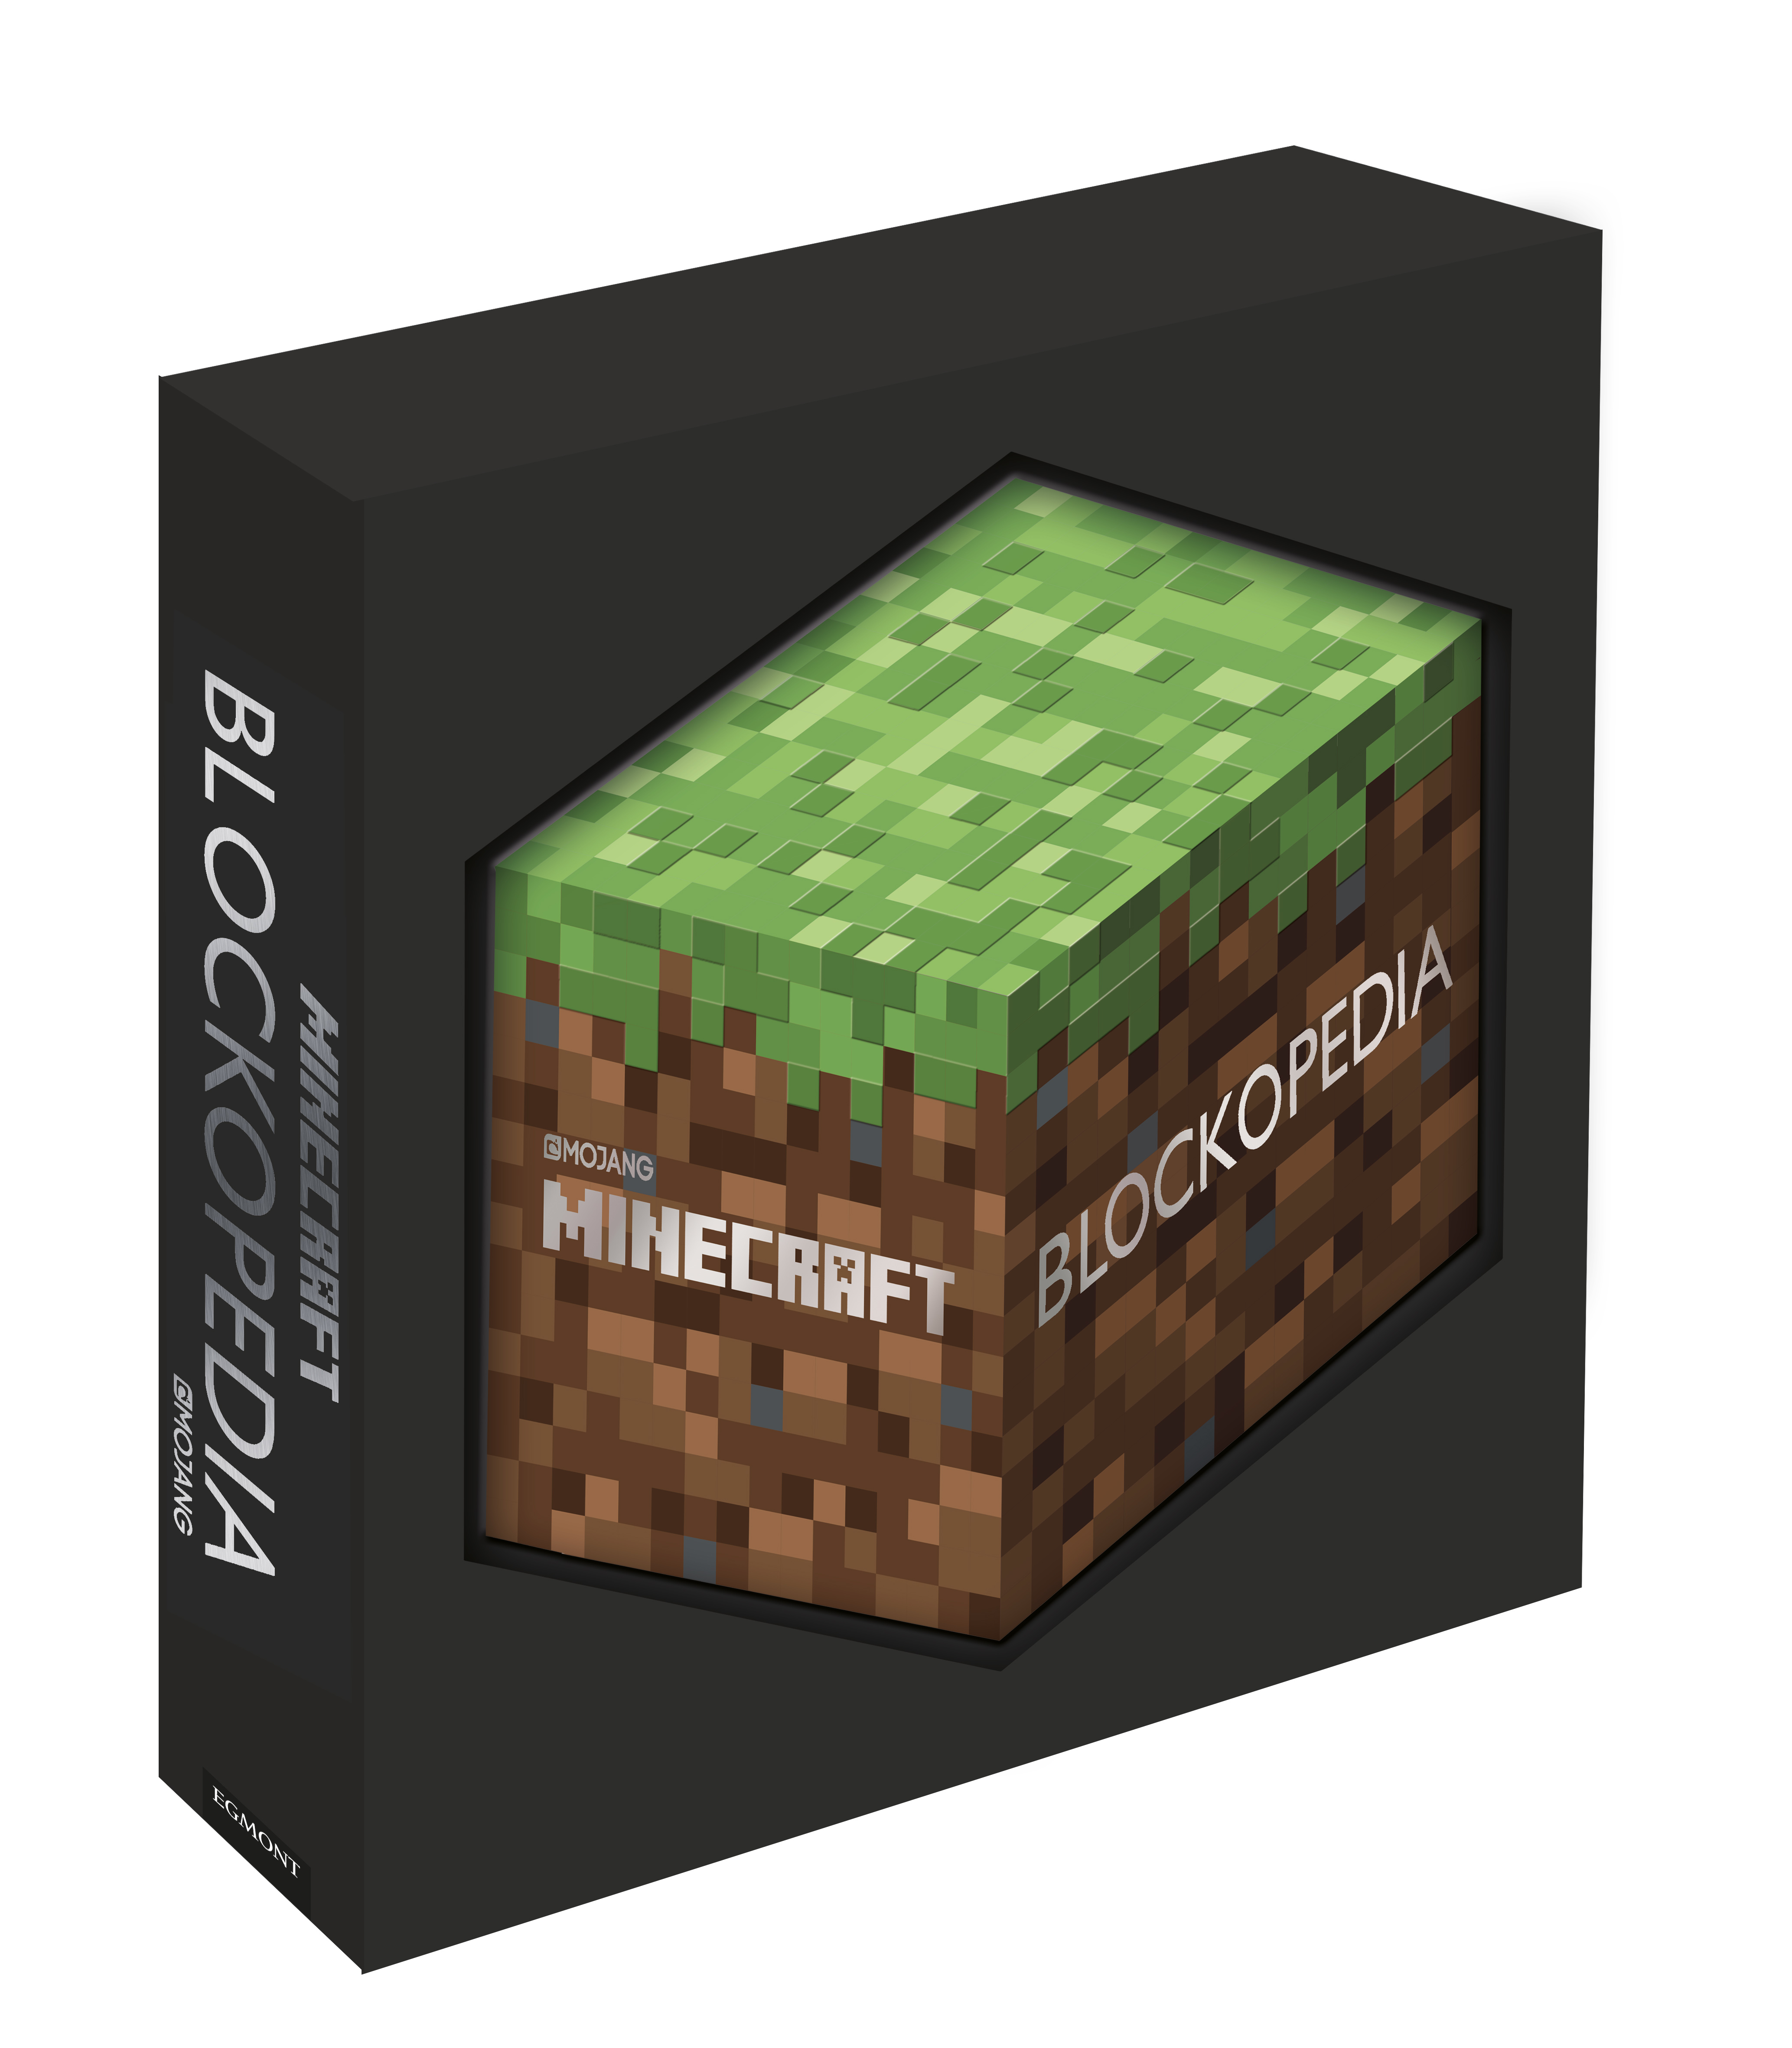 Minecraft Blockopedia by Minecraft Hardie Grant Publishing